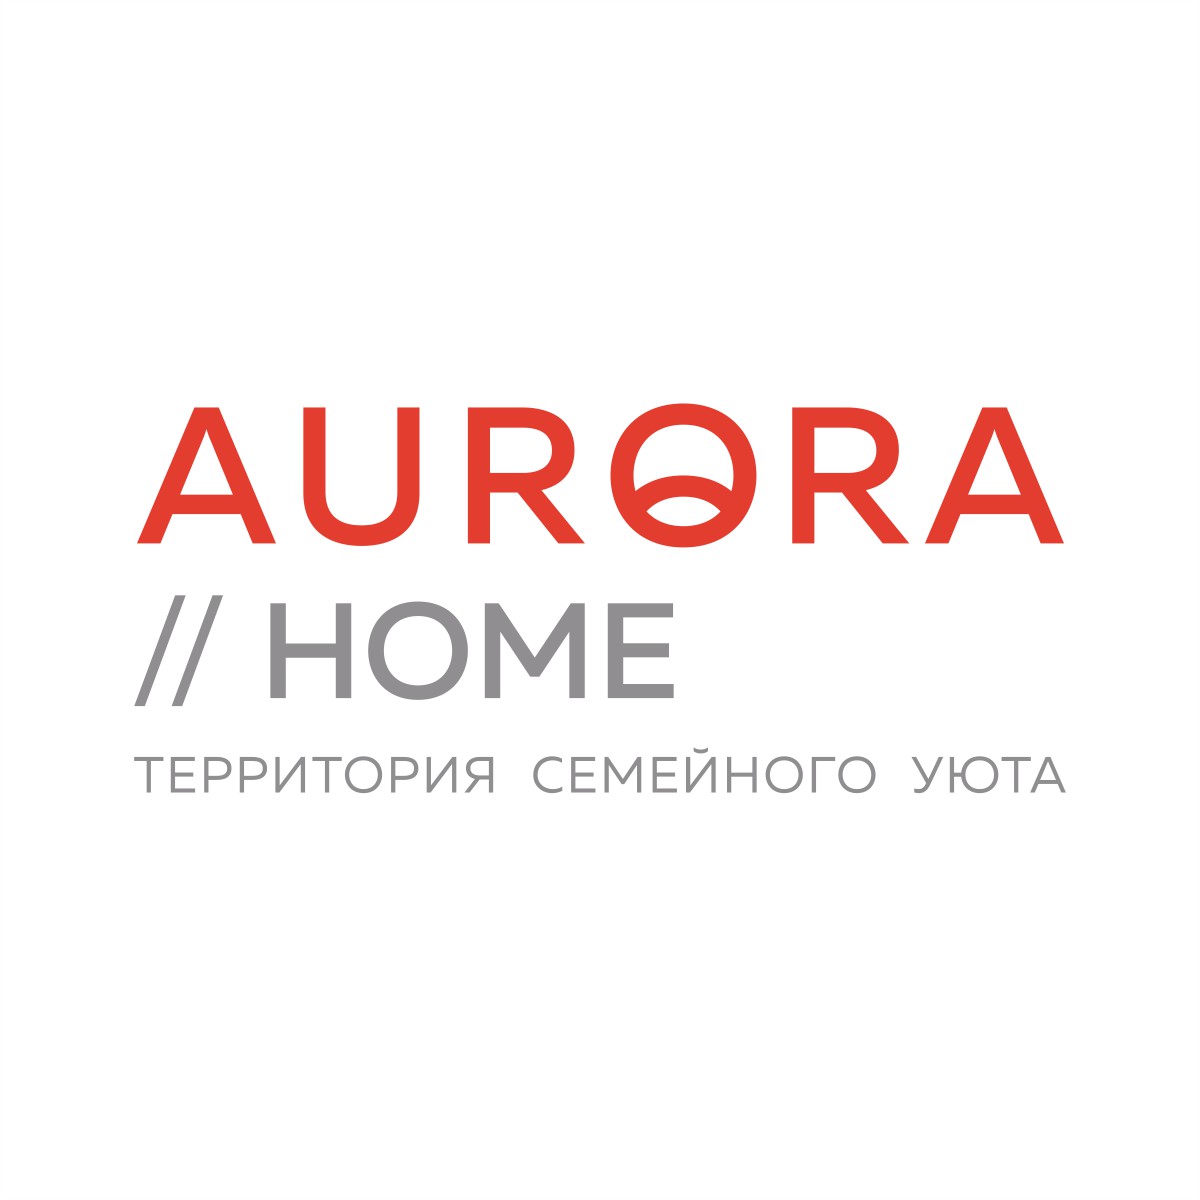 AURORA HOME